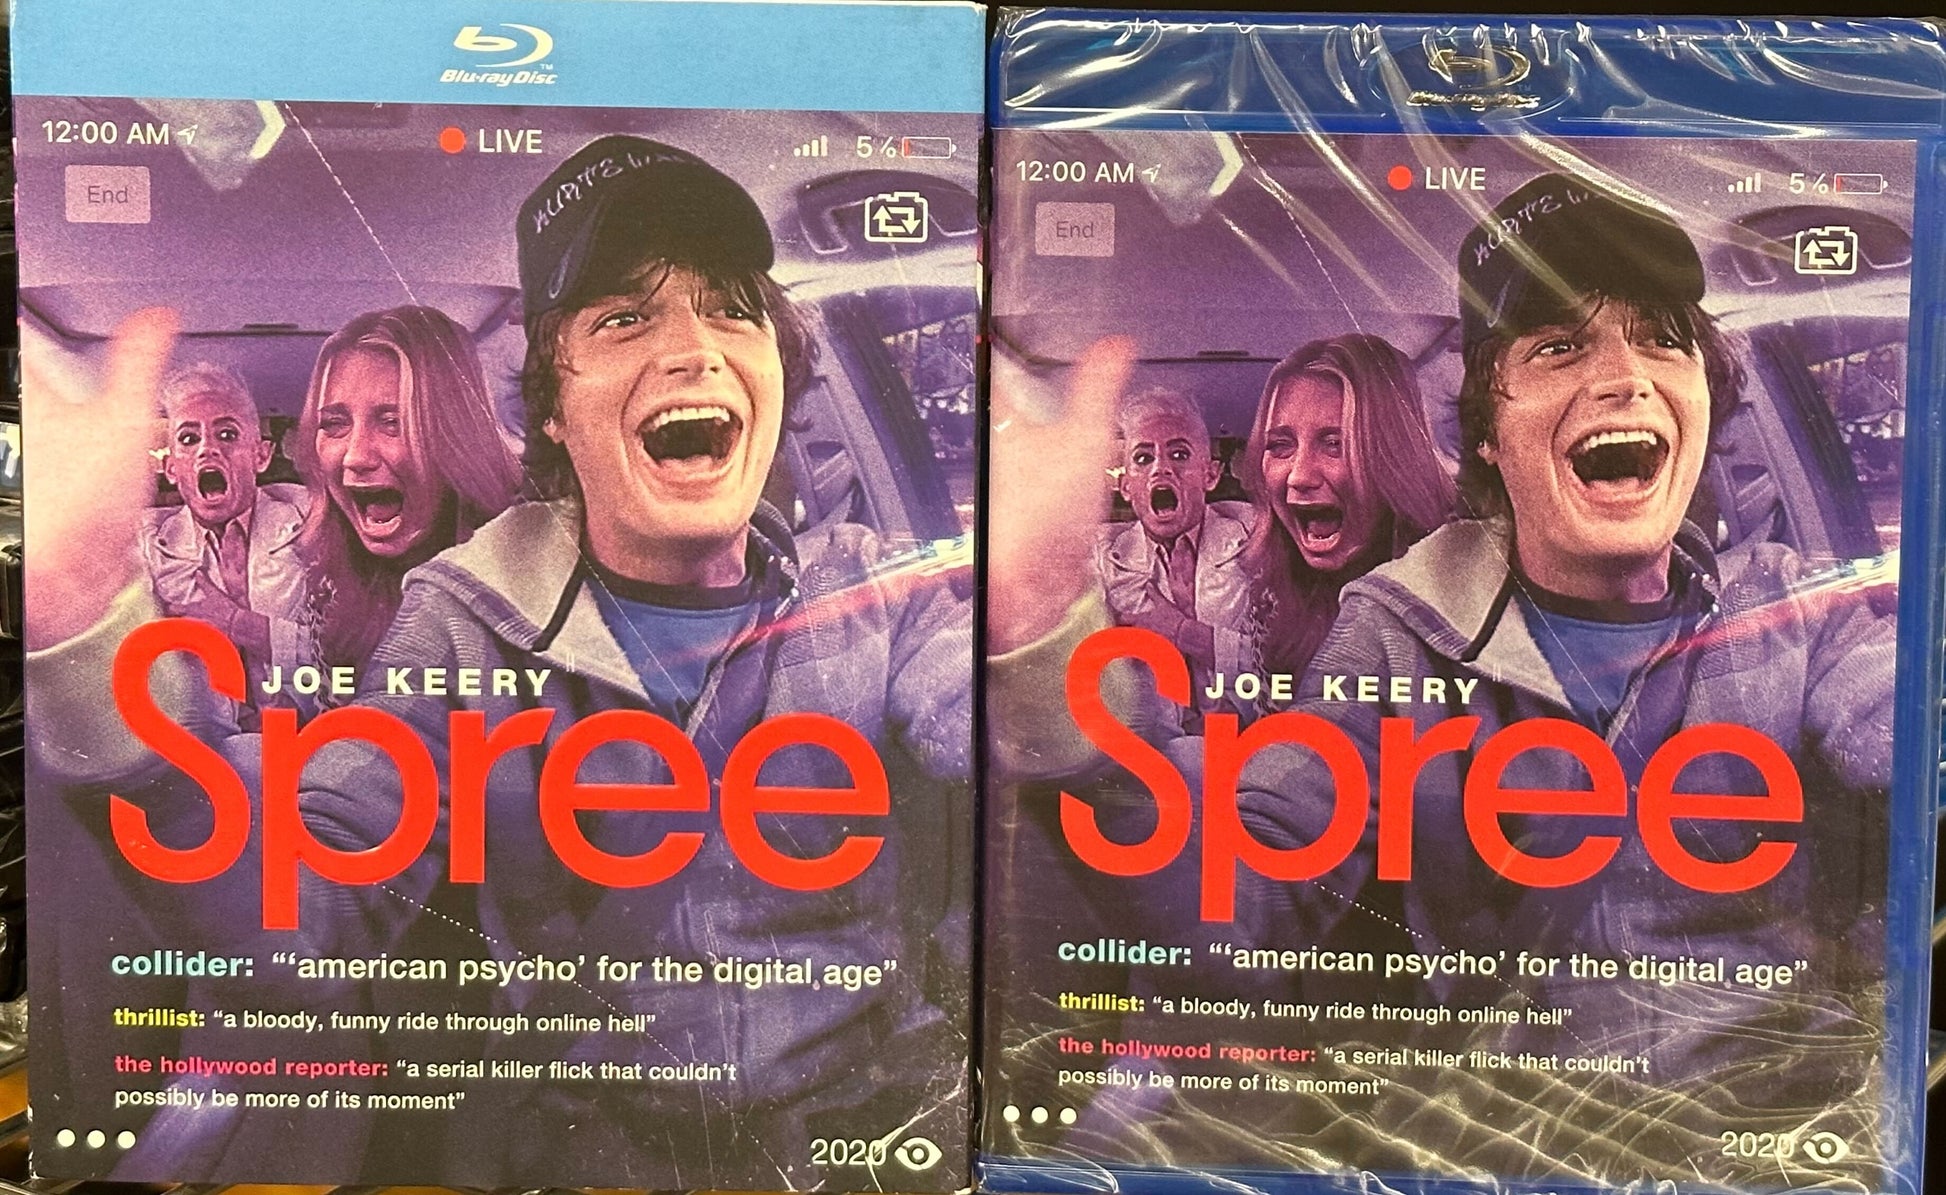 Spree - New on DVD